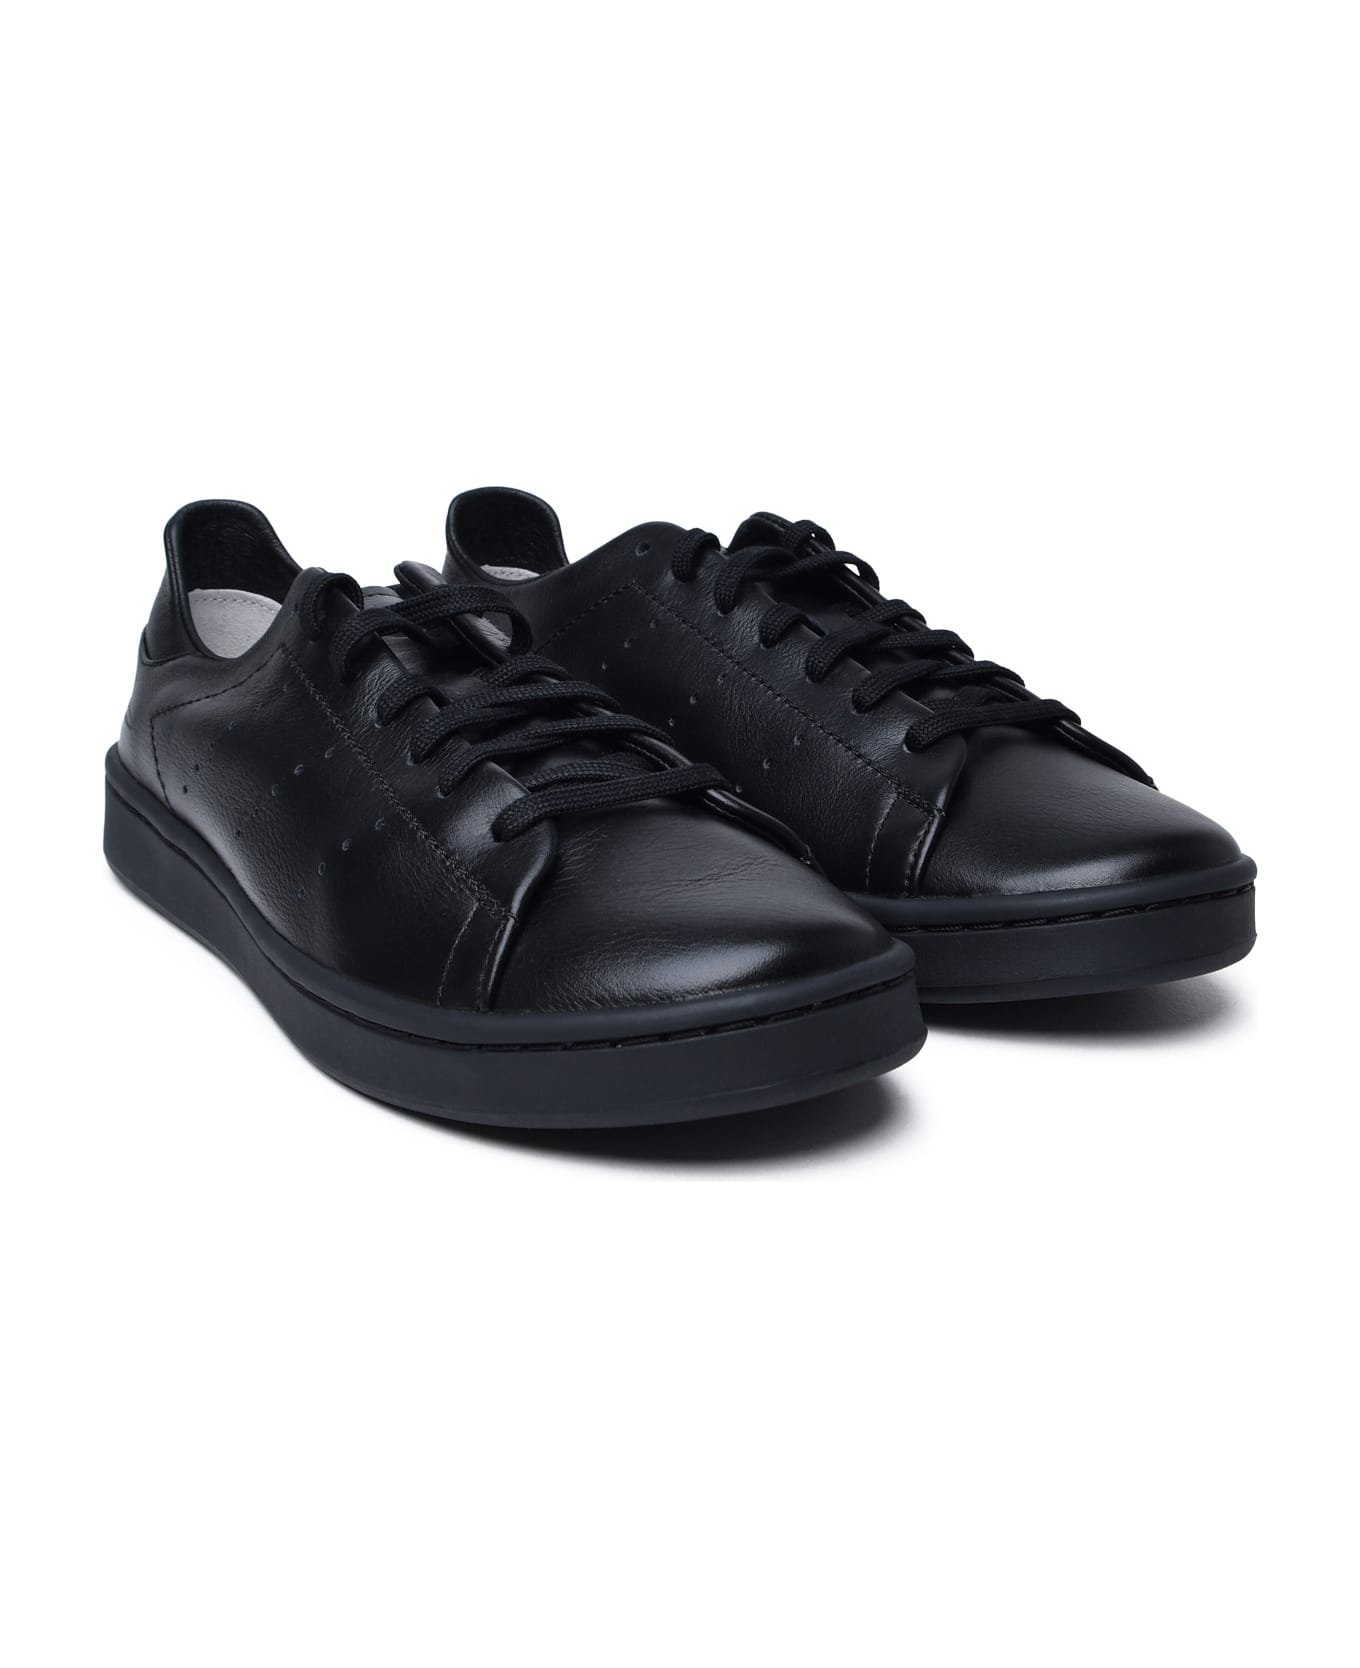 Y-3 Stan Smith Sneakers - BLACKBLACKBLACK